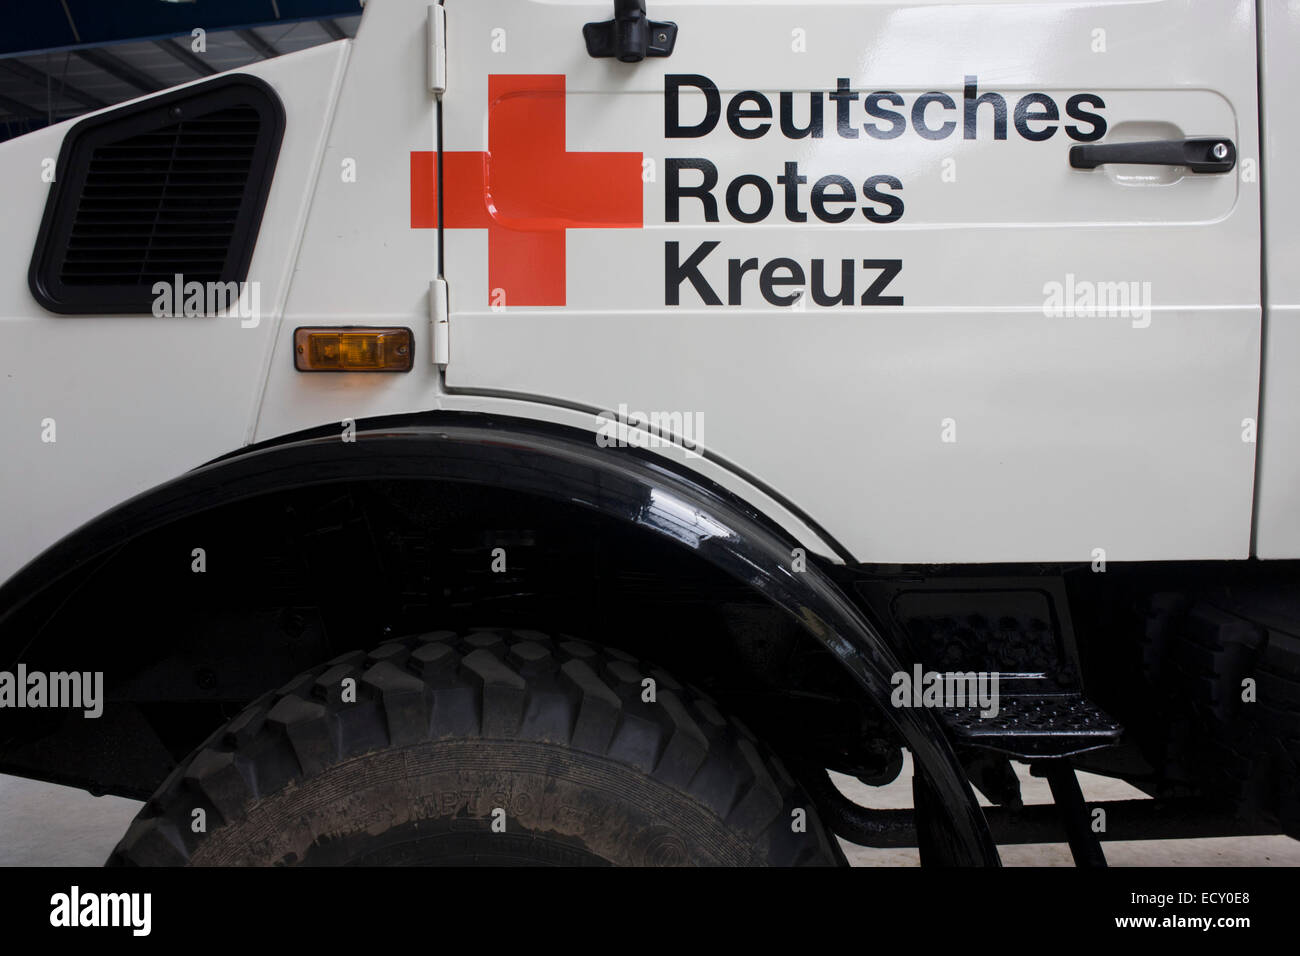 Deutsches Rotes Kreuz - DRK (German Red Cross) vehicle logos at their logistics centre at Berlin-Schönefeld airport. Stock Photo